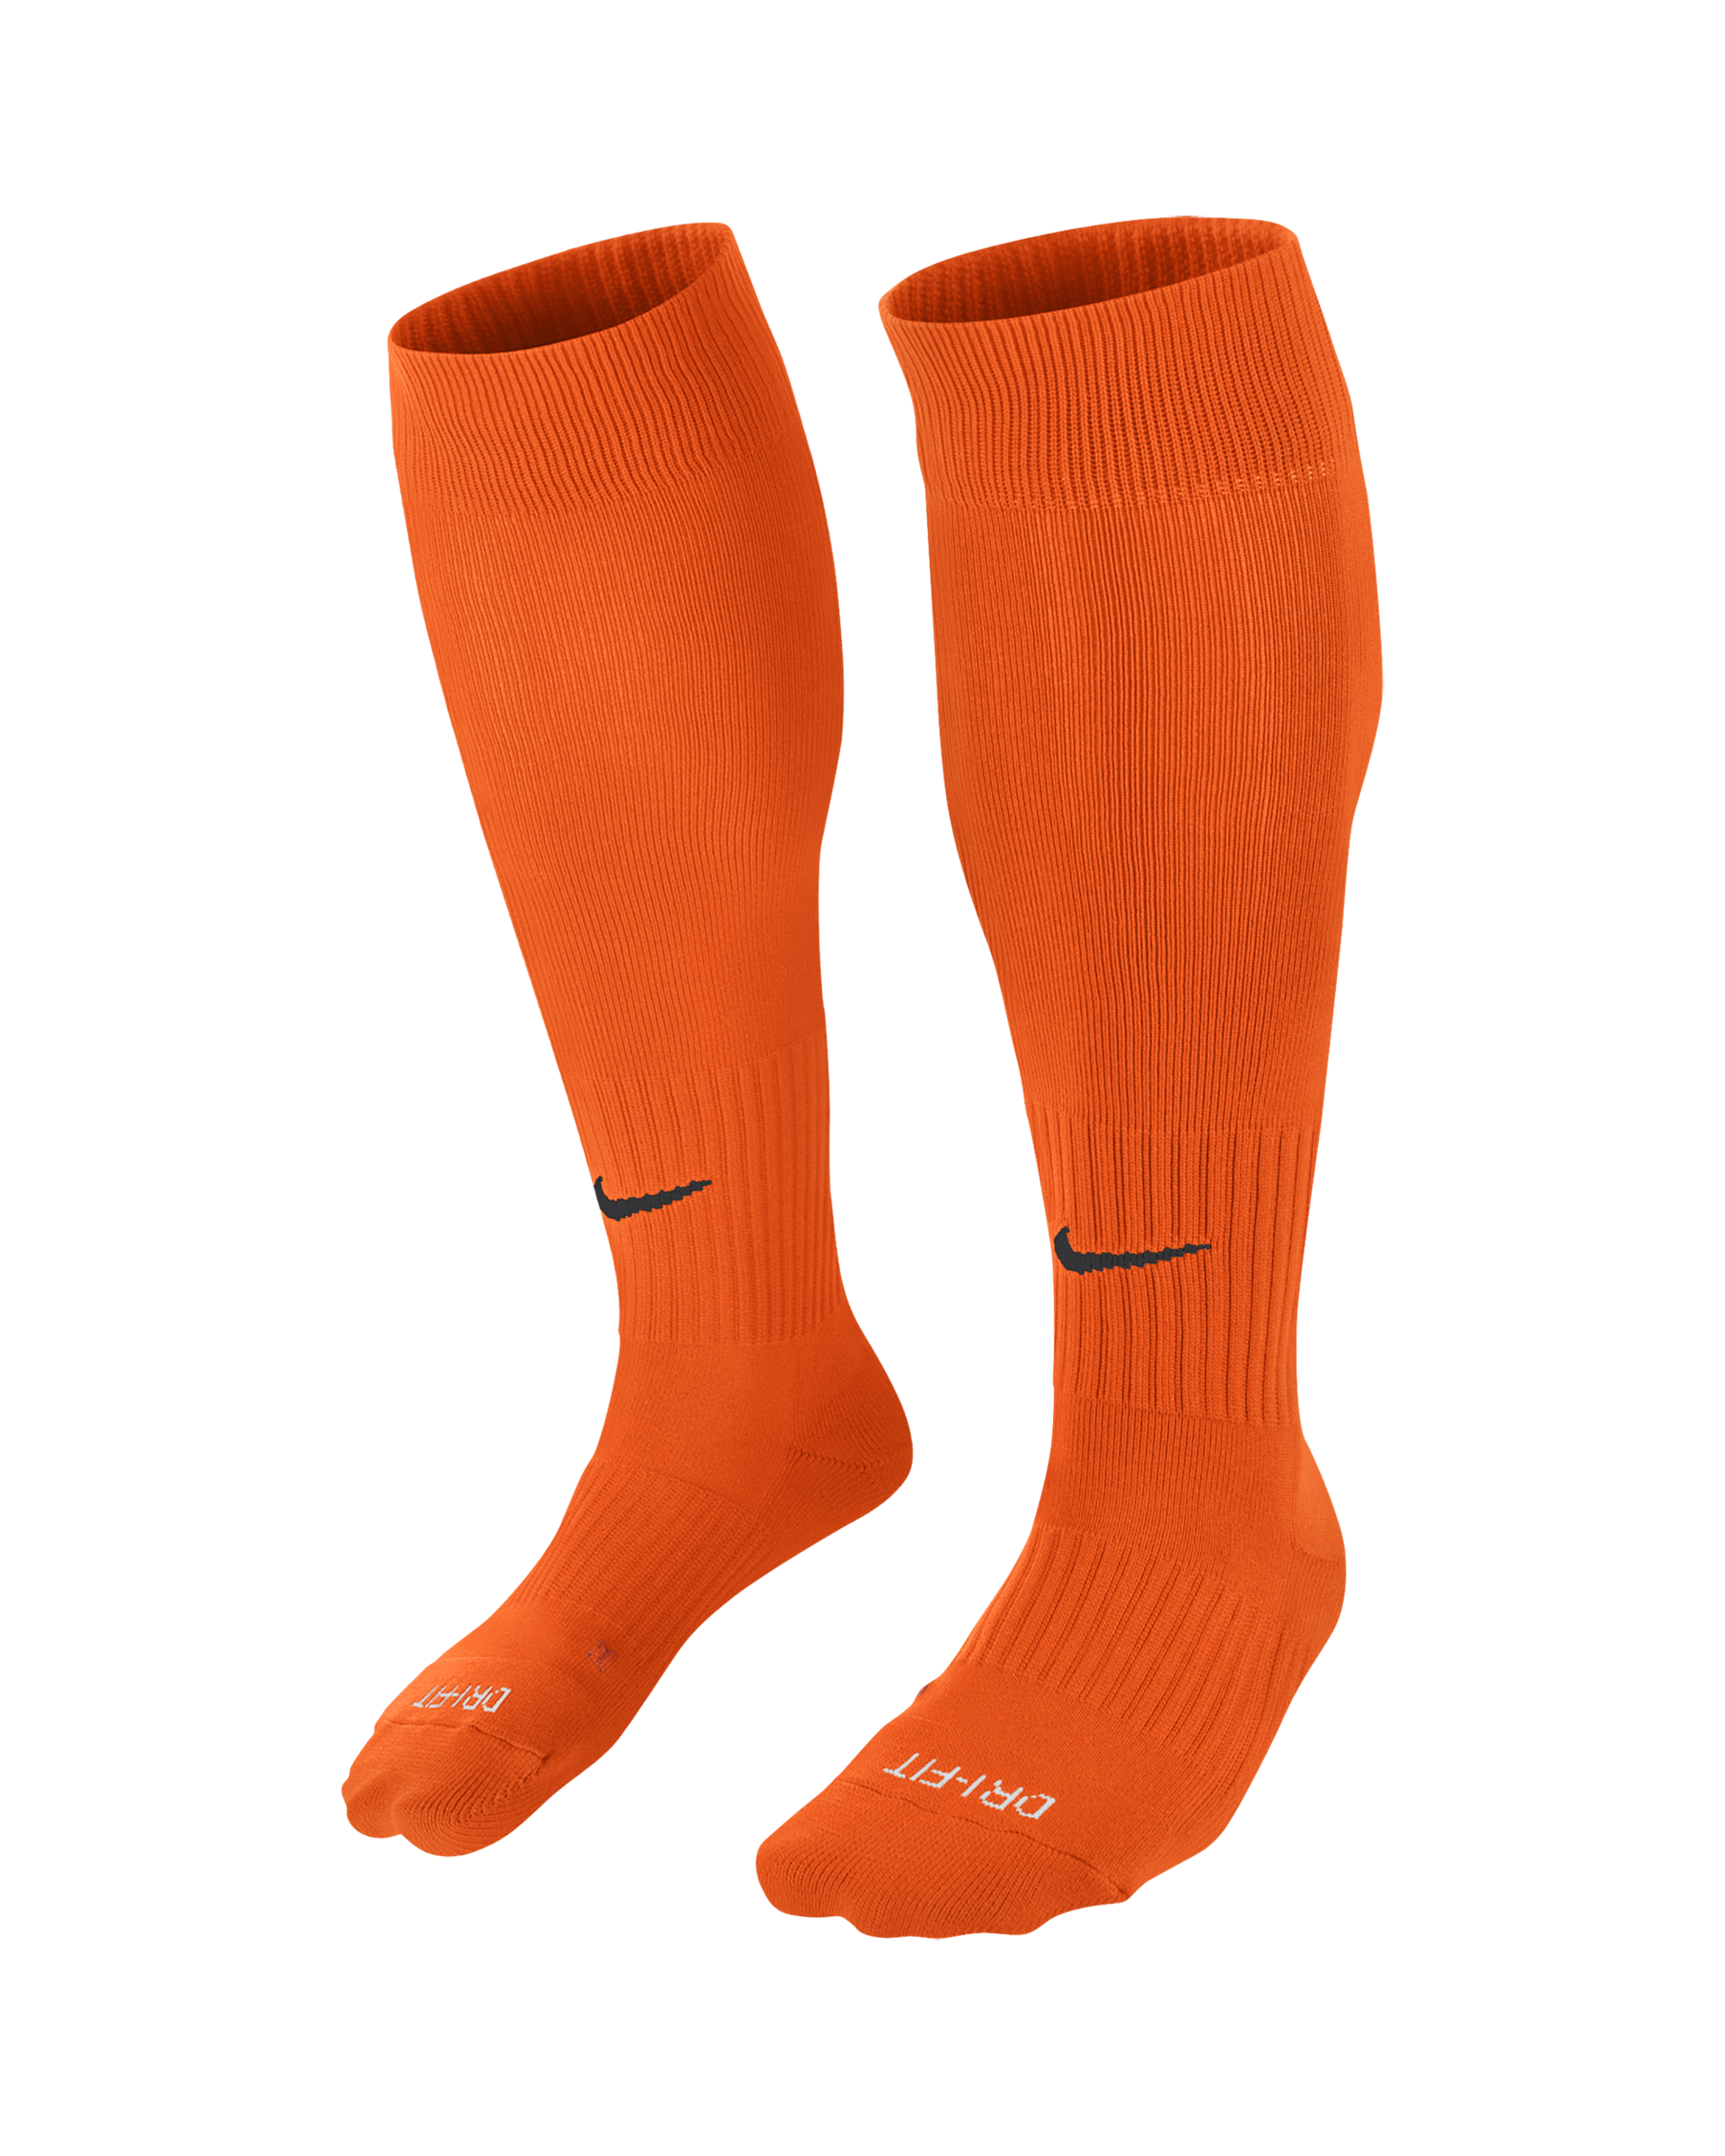 ABFC - GK Classic Sock II - Orange